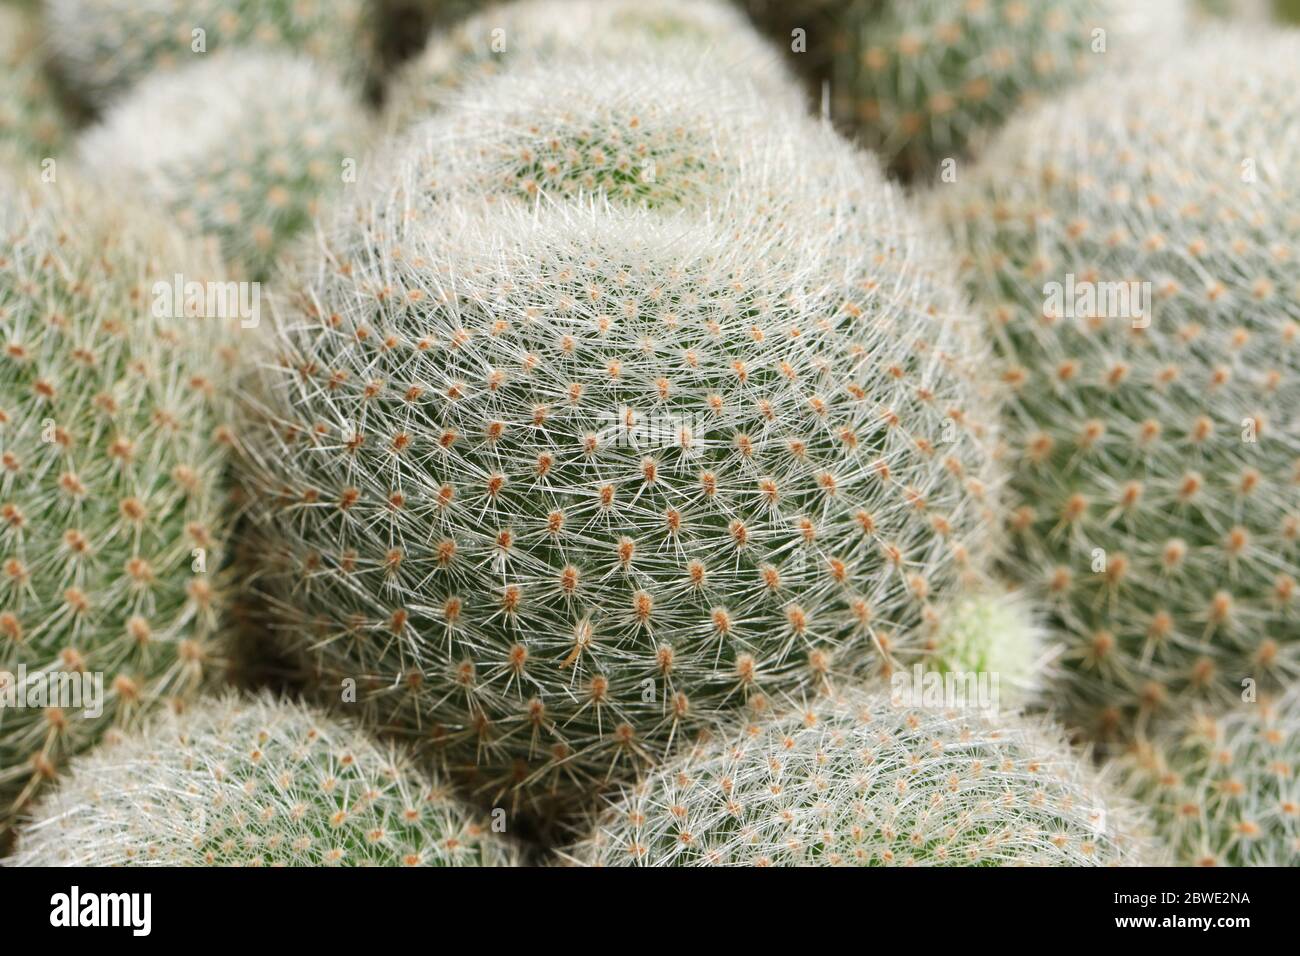 A group of pretty thorny Cactus, Rebutia lima naranja. Stock Photo